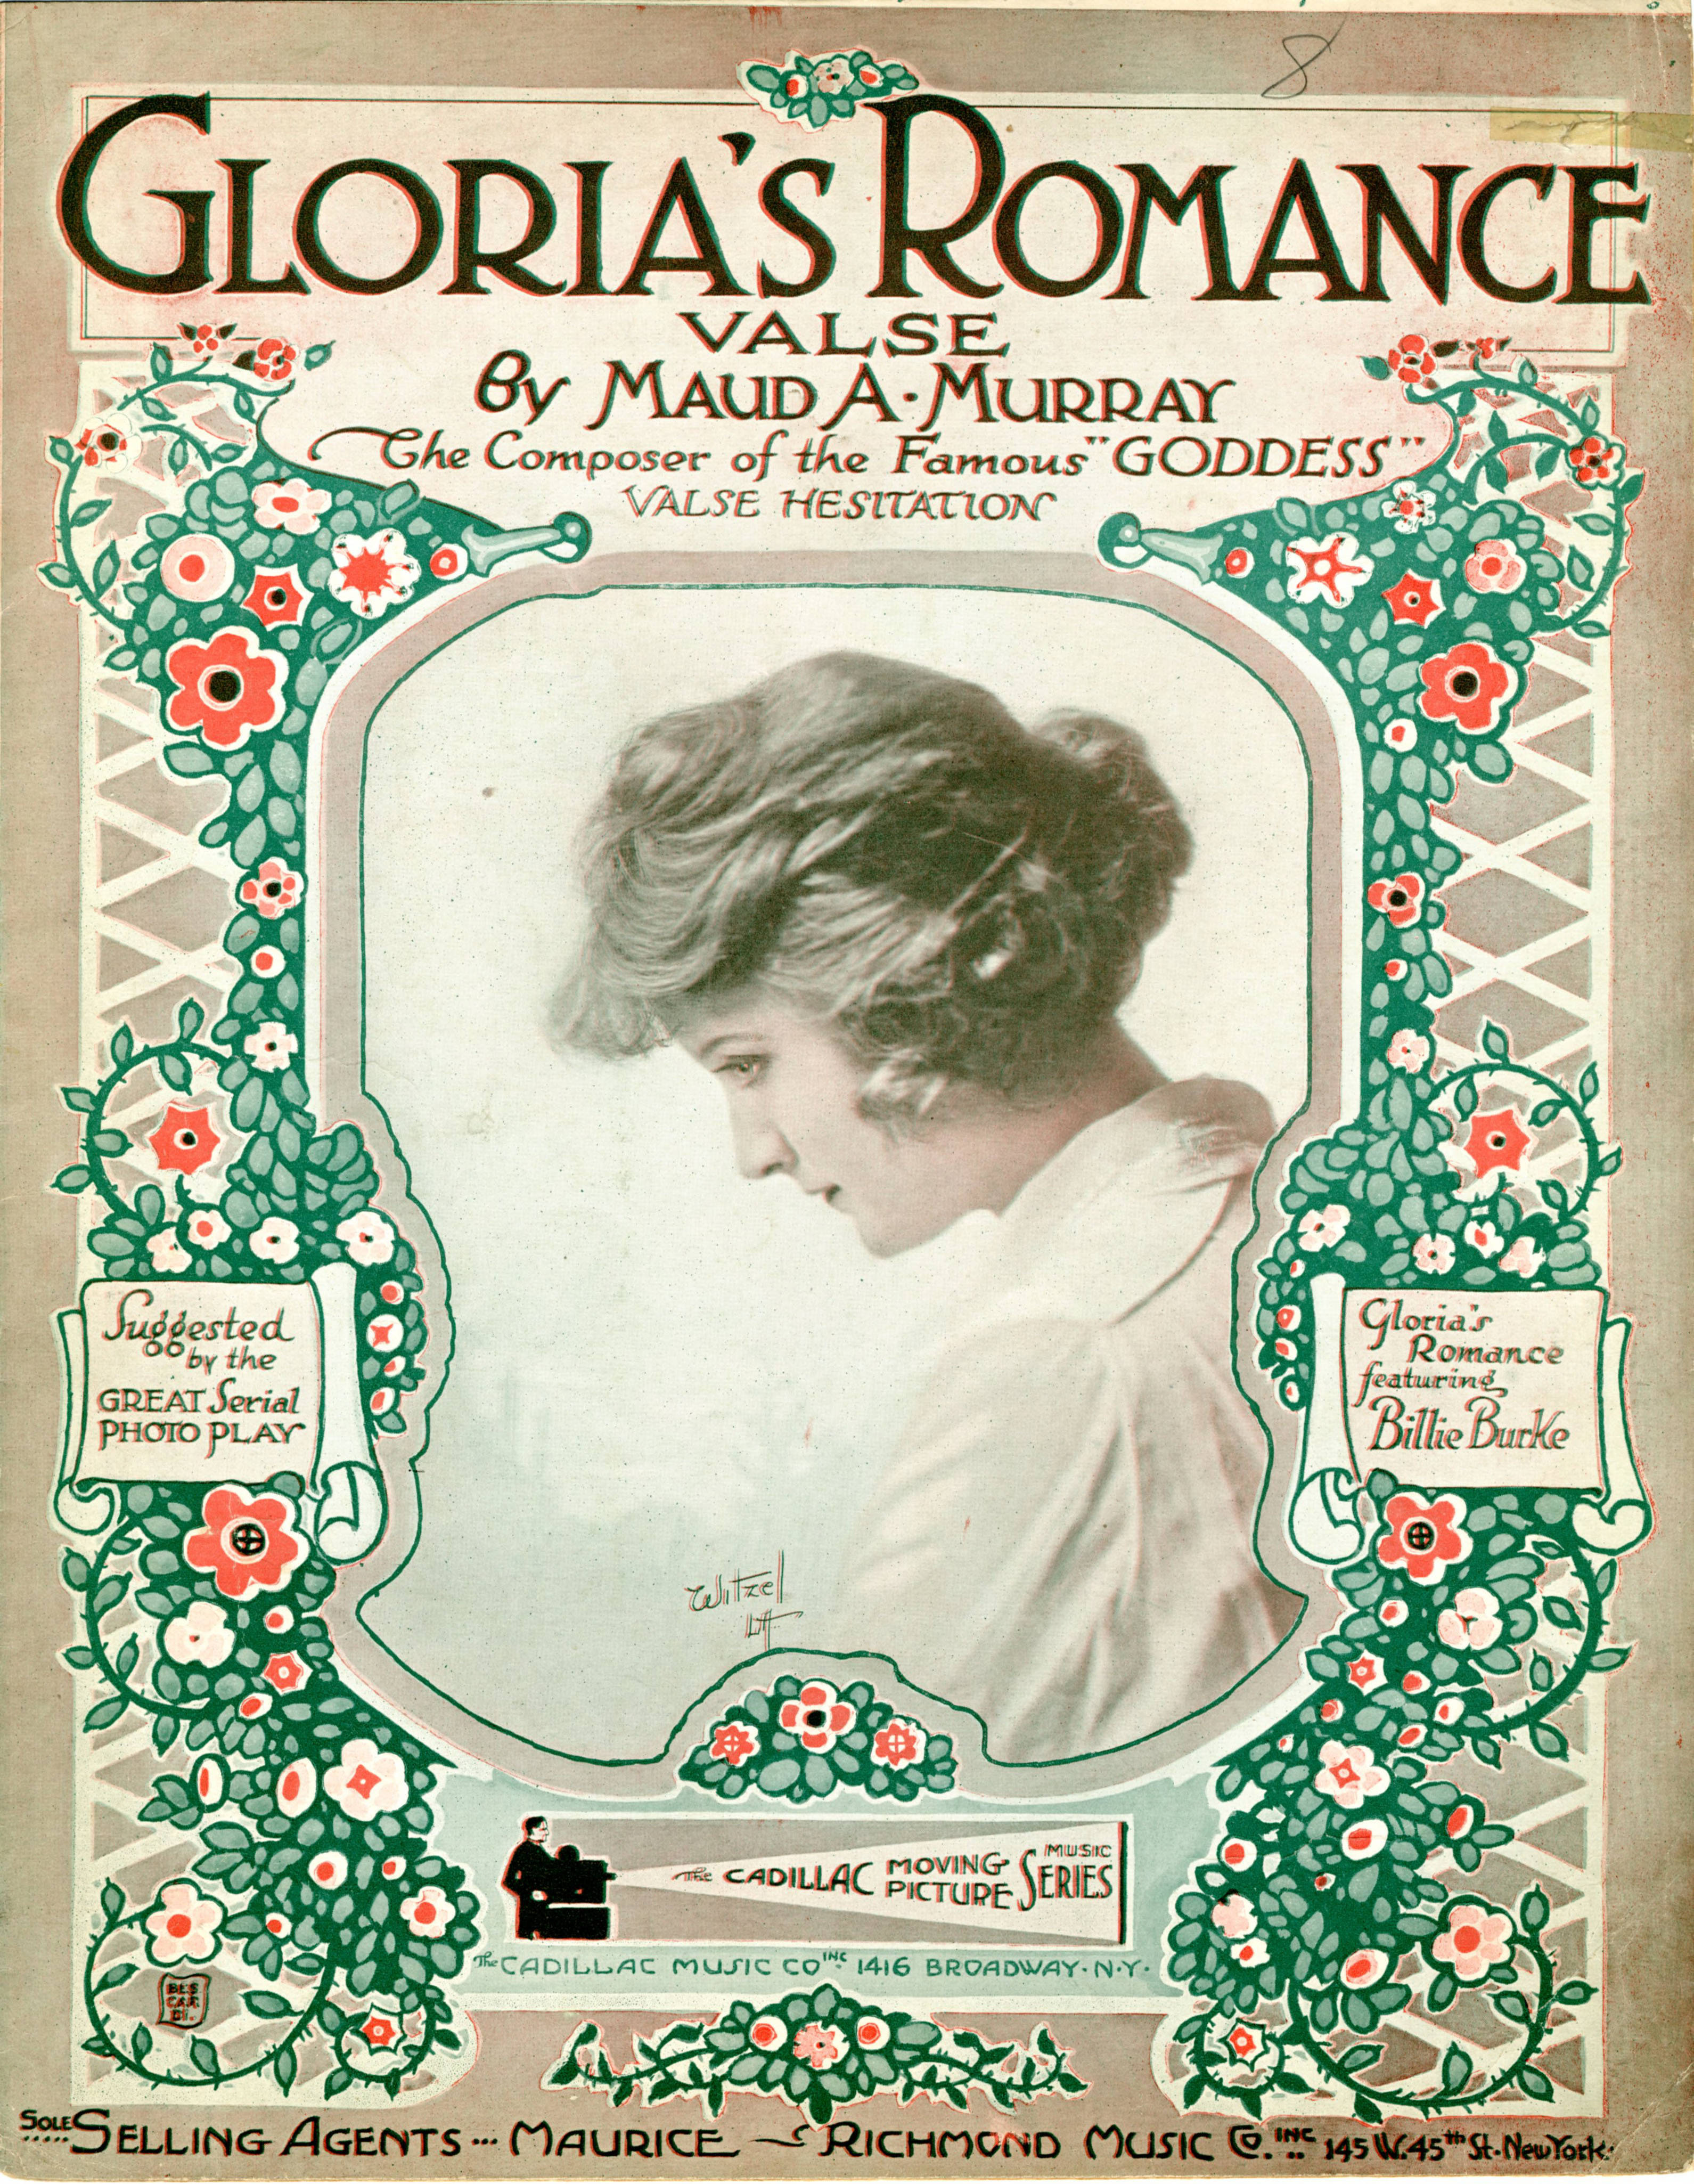 Sheet music cover - GLORIA'S ROMANCE - VALSE (1916)